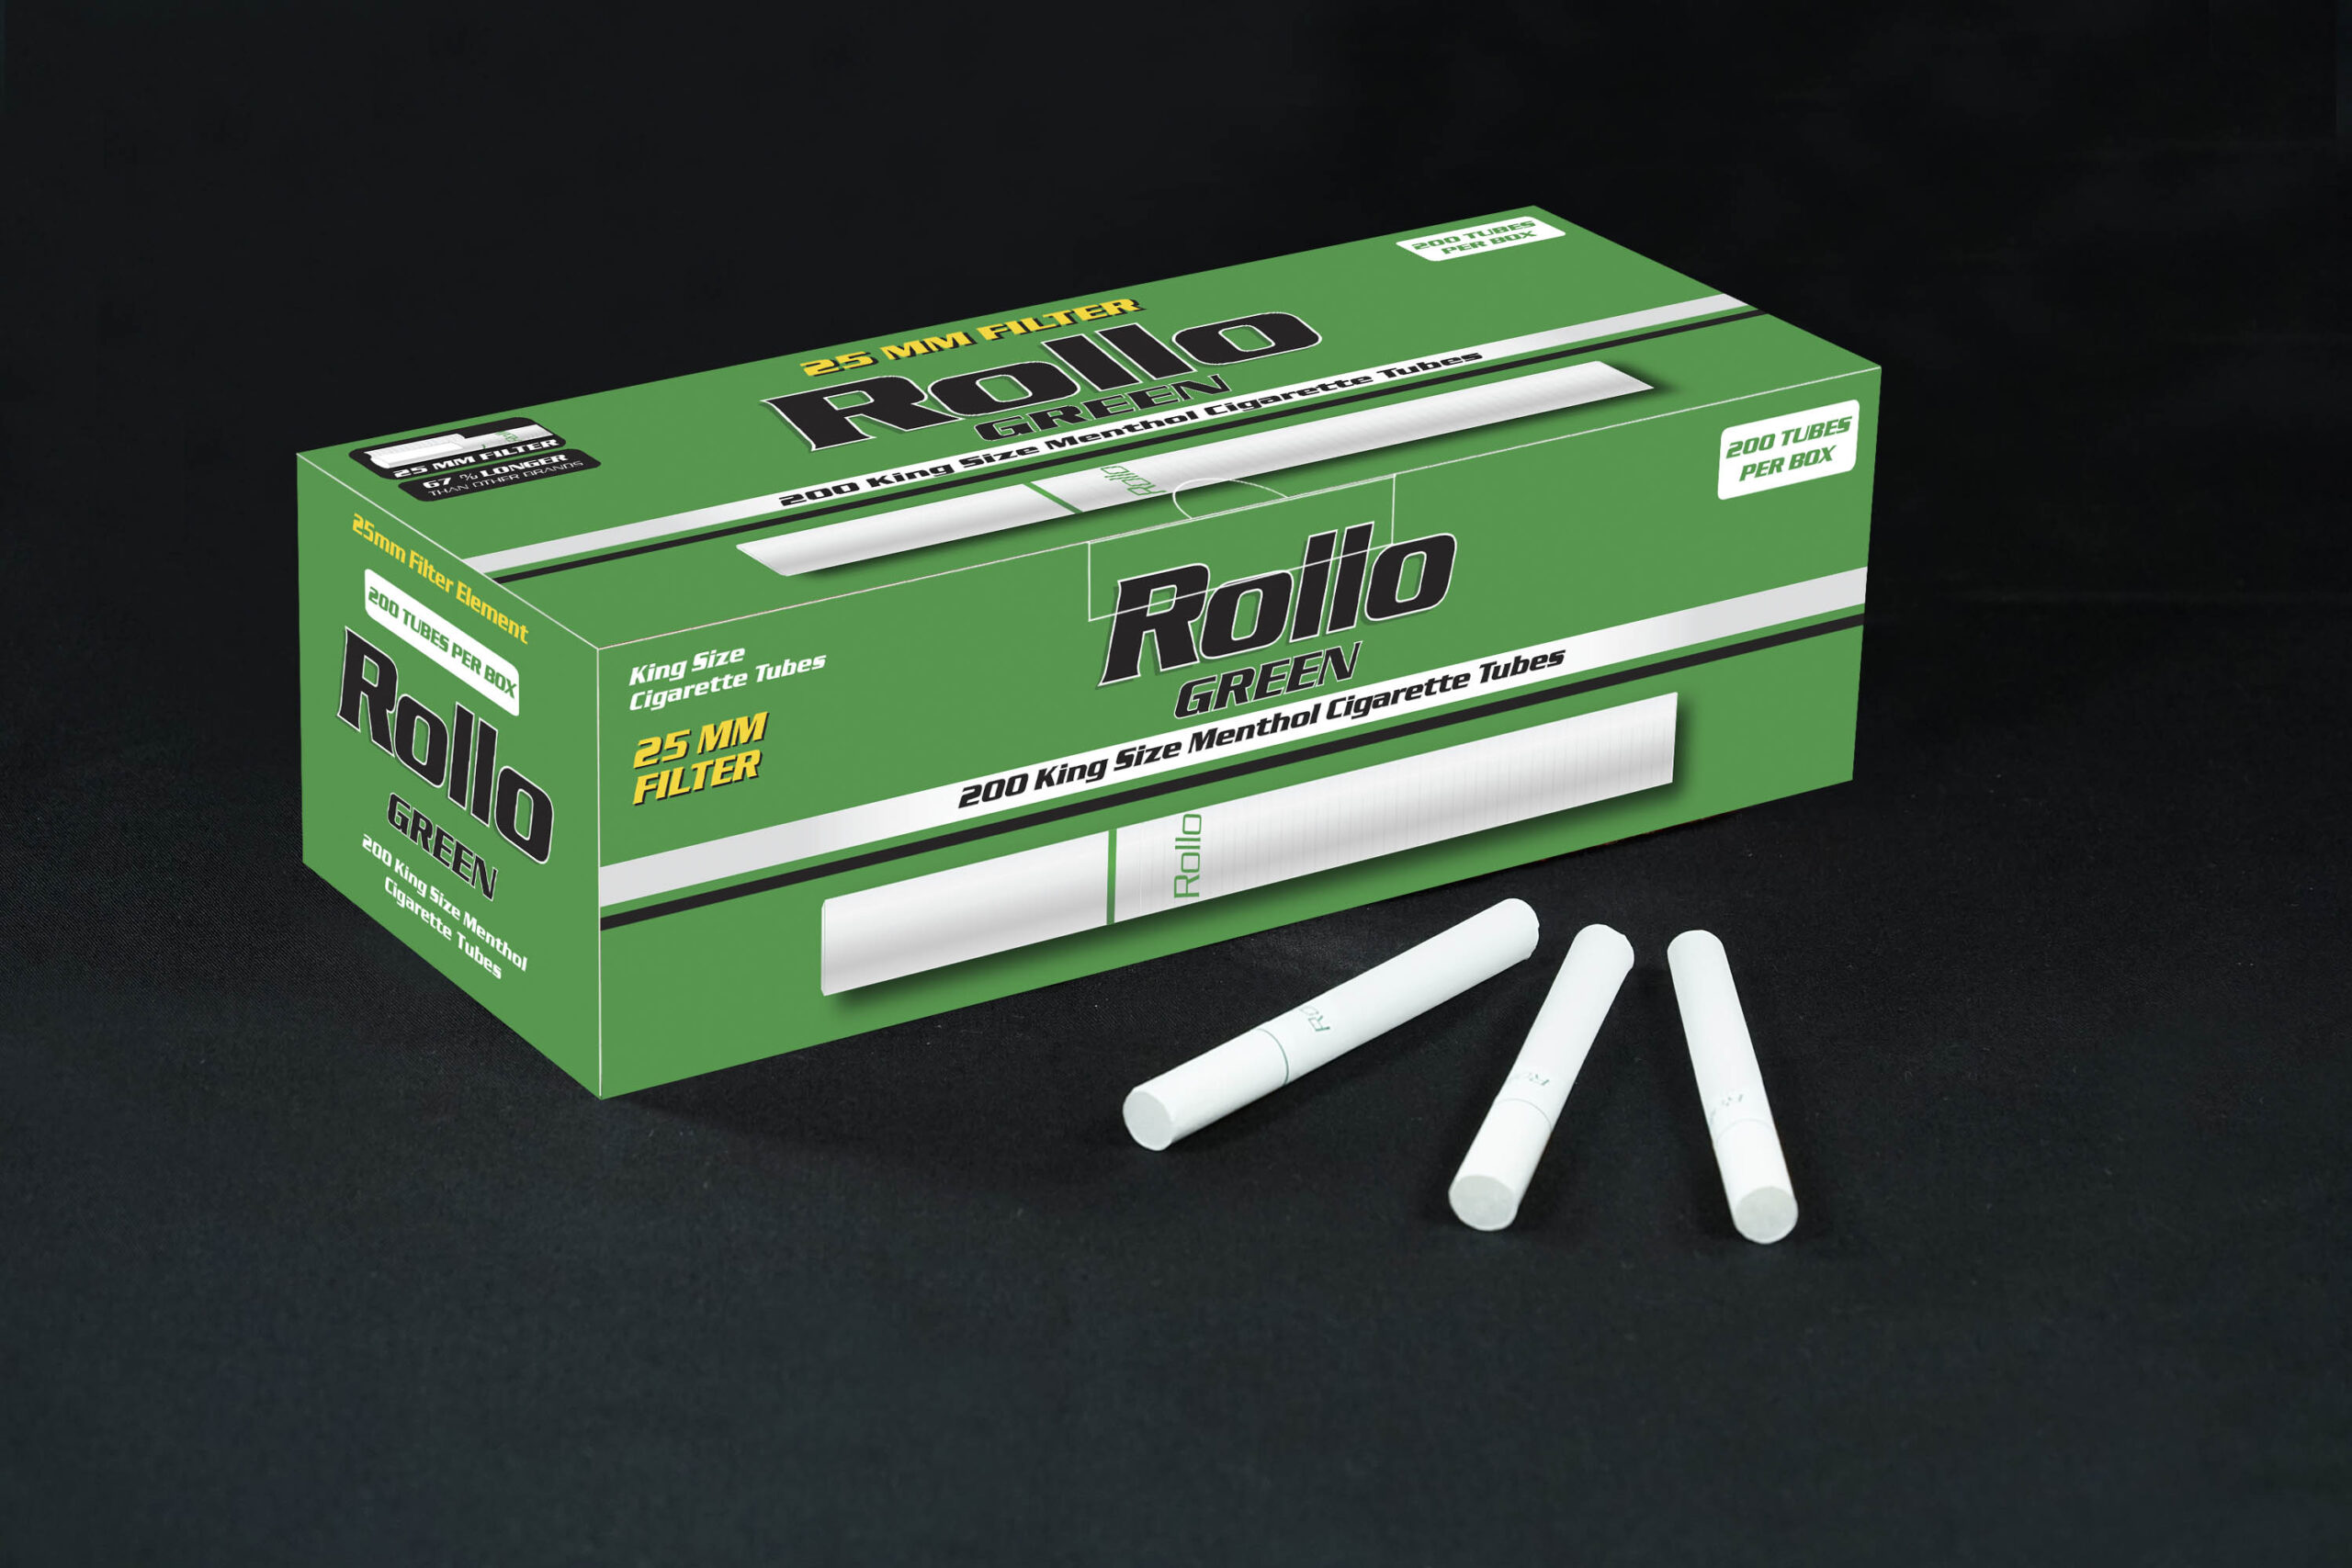 Menthol Cigarette Tubes Rollo Green 200 CT 25mm filter length